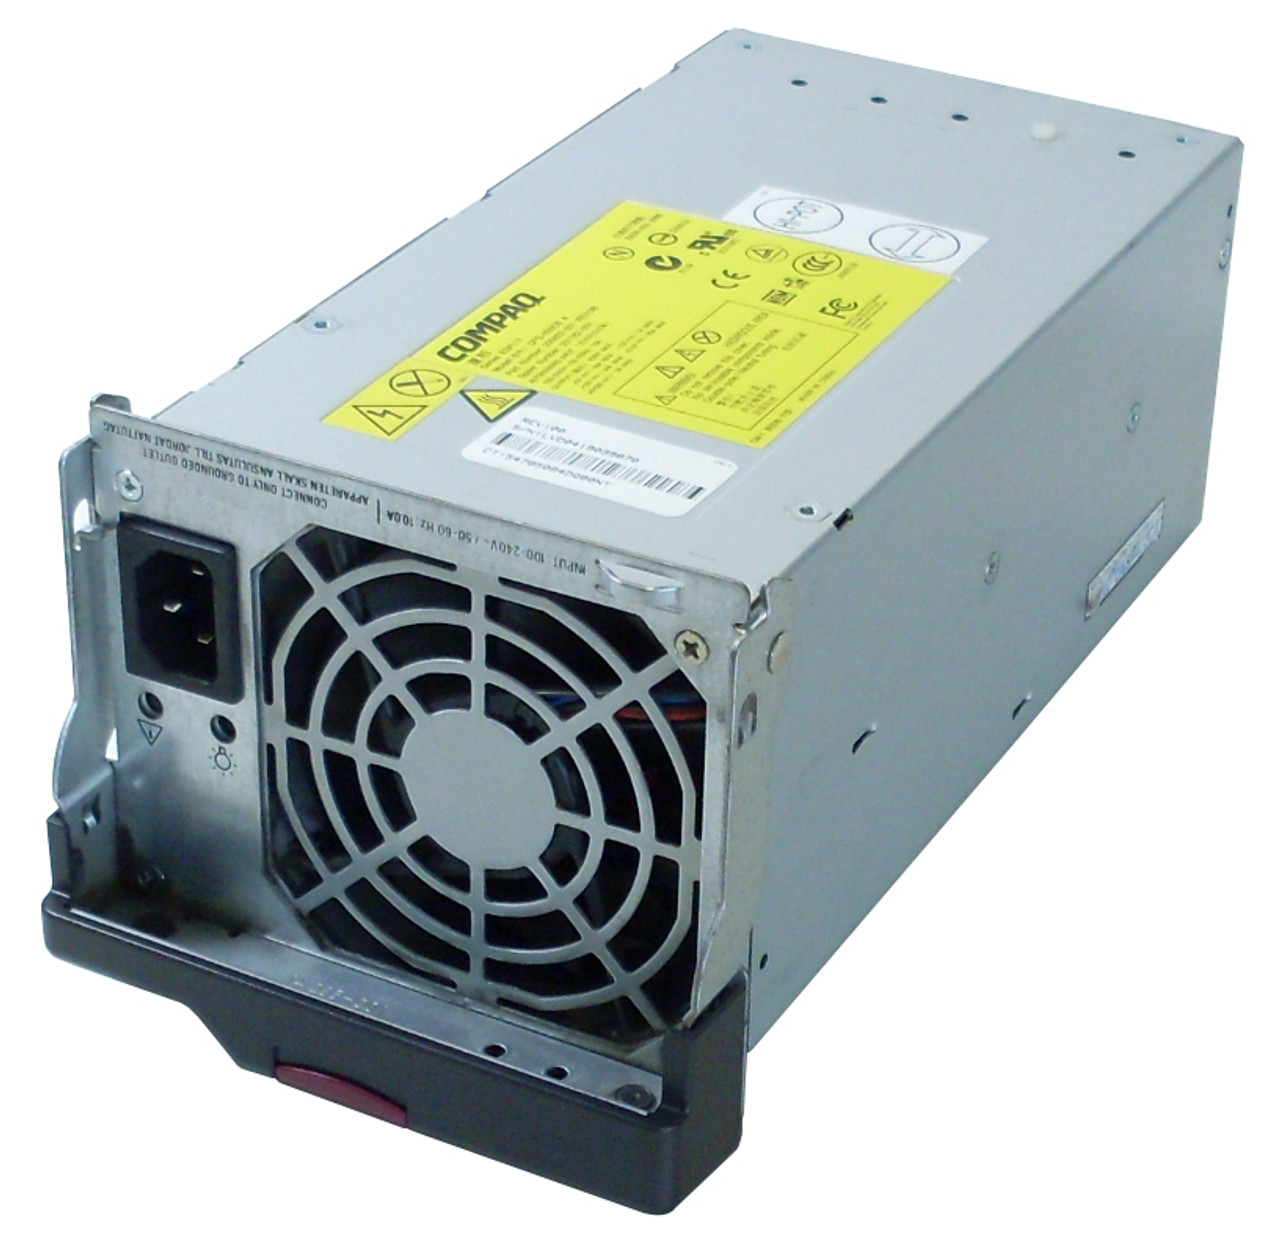 230822-001 - HP 600-Watts AC 100-240V Redundant Hot-Plug Power Supply for ProLiant ML530/ML570 G2 Server